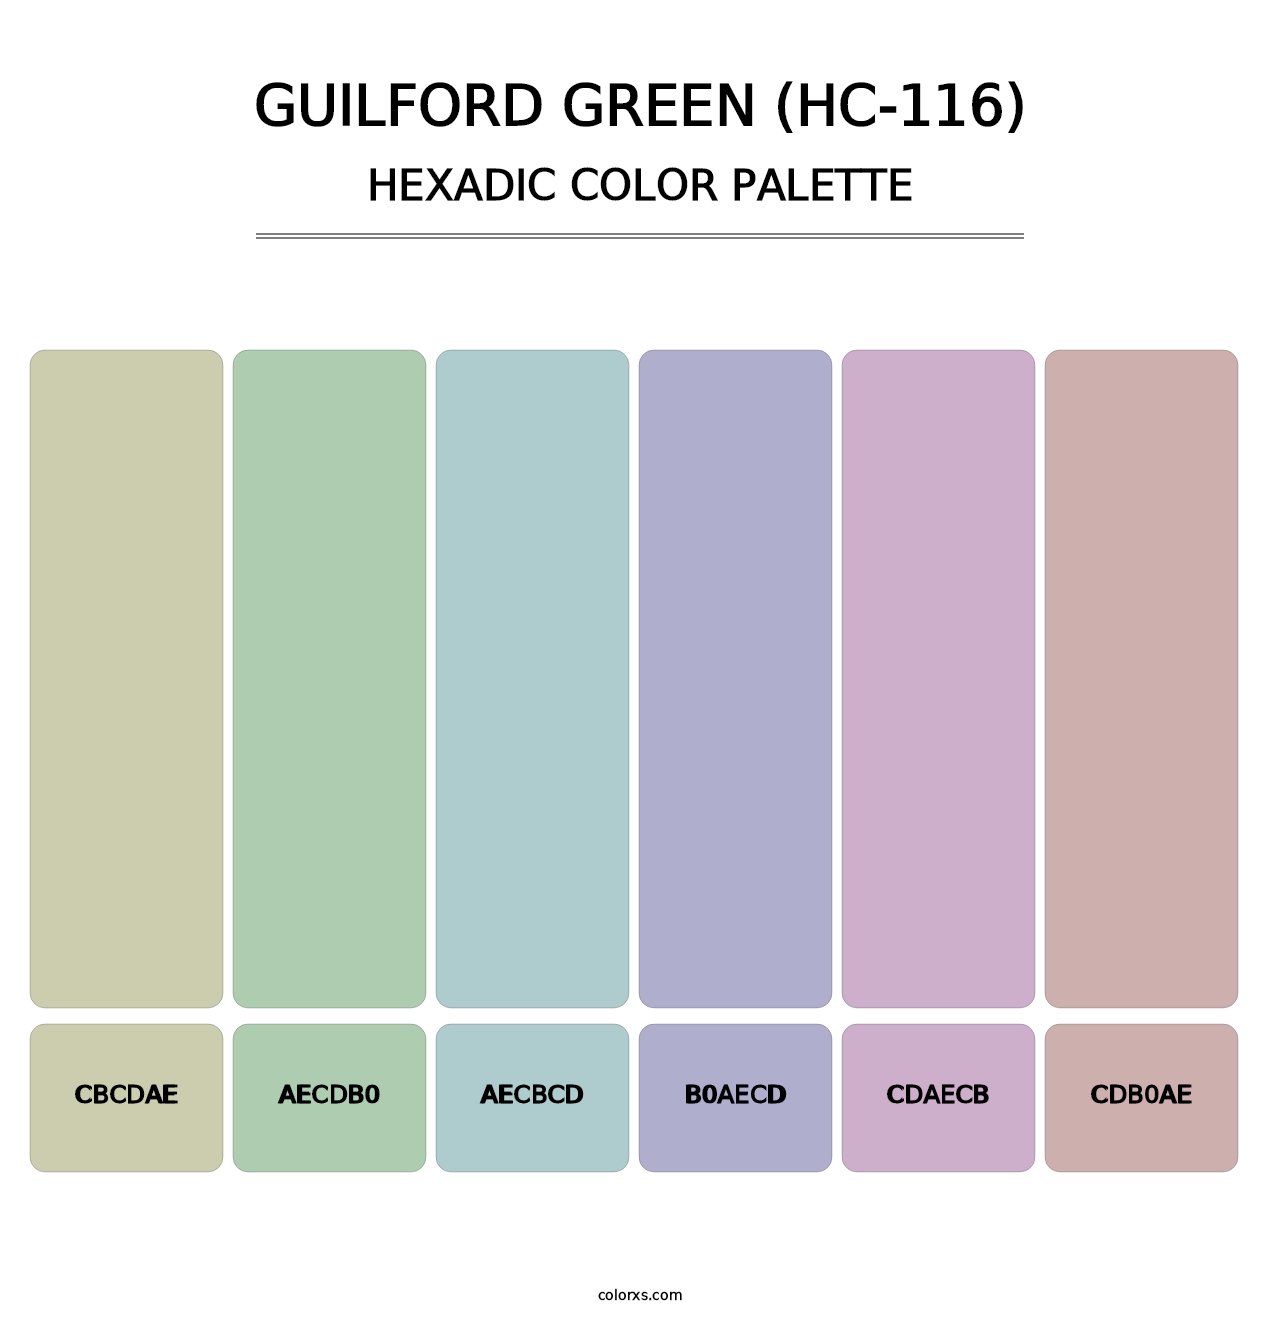 Guilford Green (HC-116) - Hexadic Color Palette